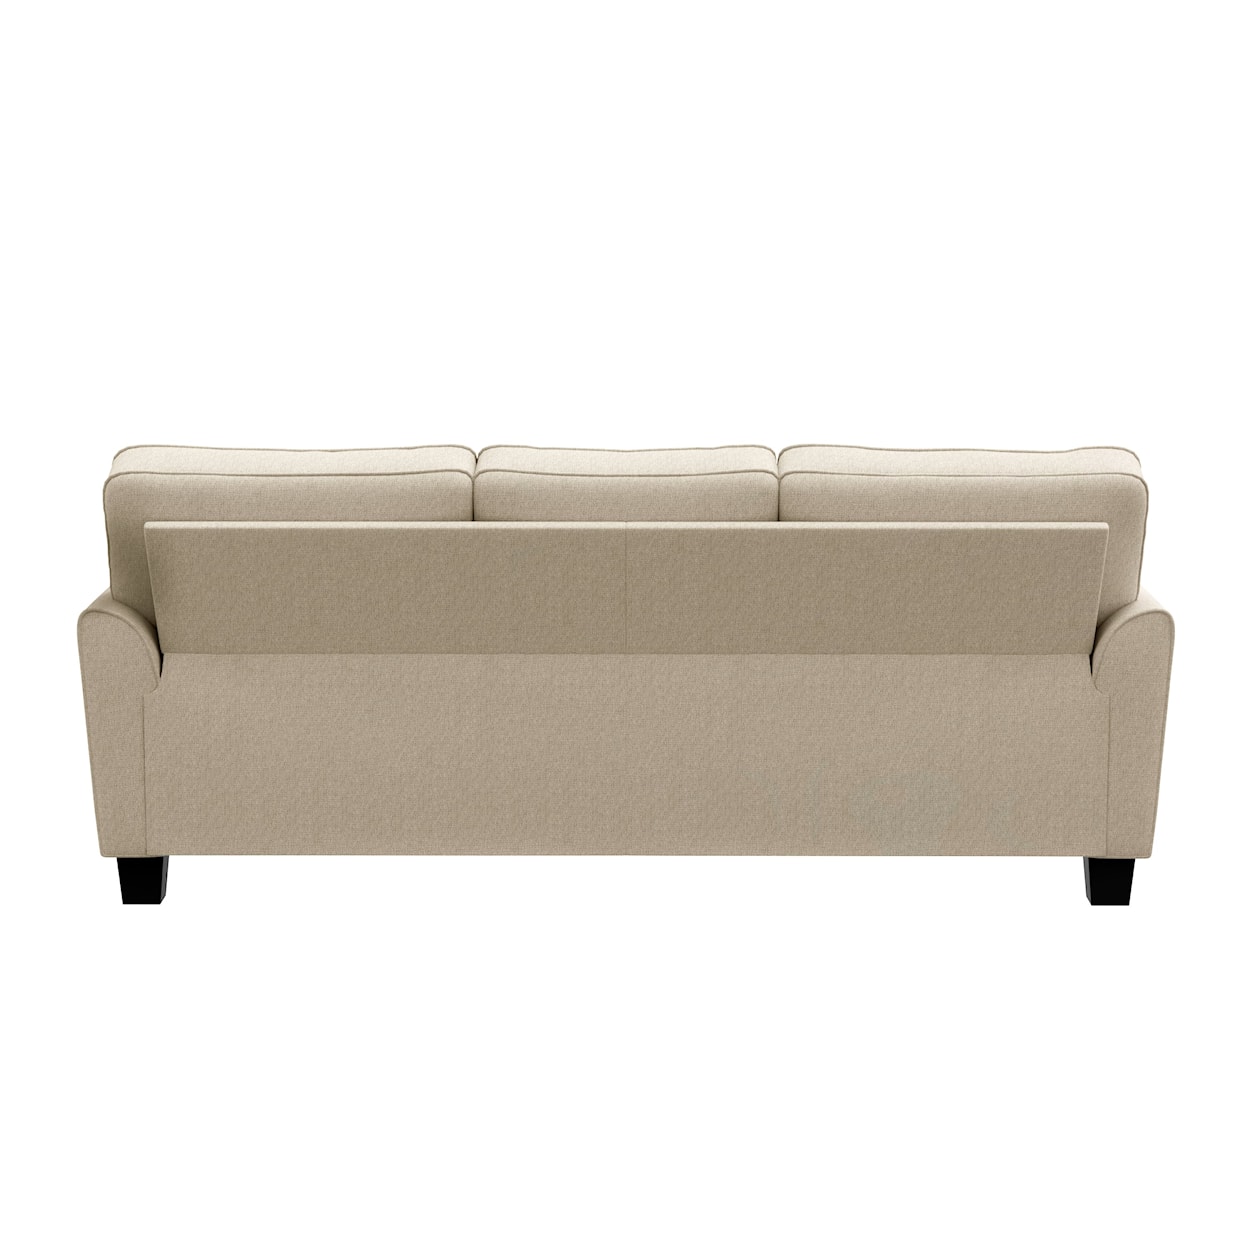 Hillsdale Daniel Sectional Sofa